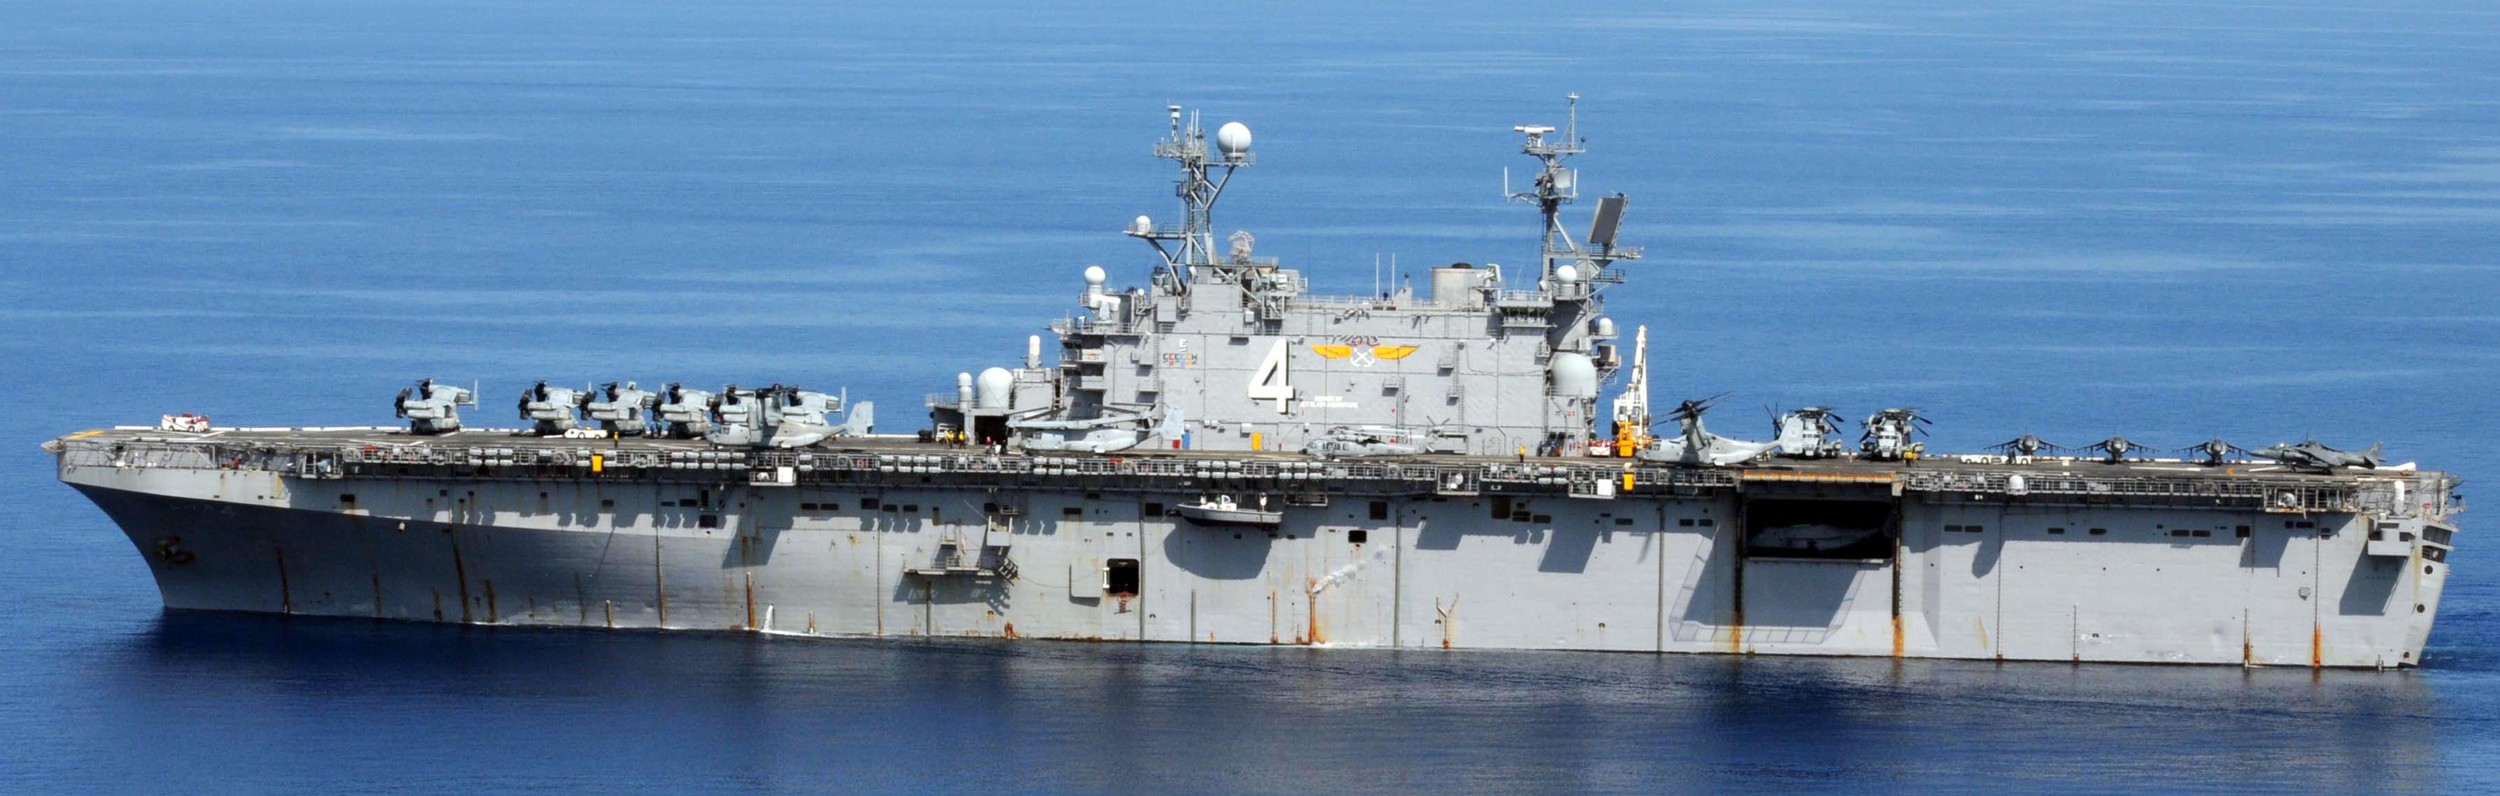 lha-4 uss nassau tarawa class amphibious assault ship us navy 46 vmm-162 caribbean sea